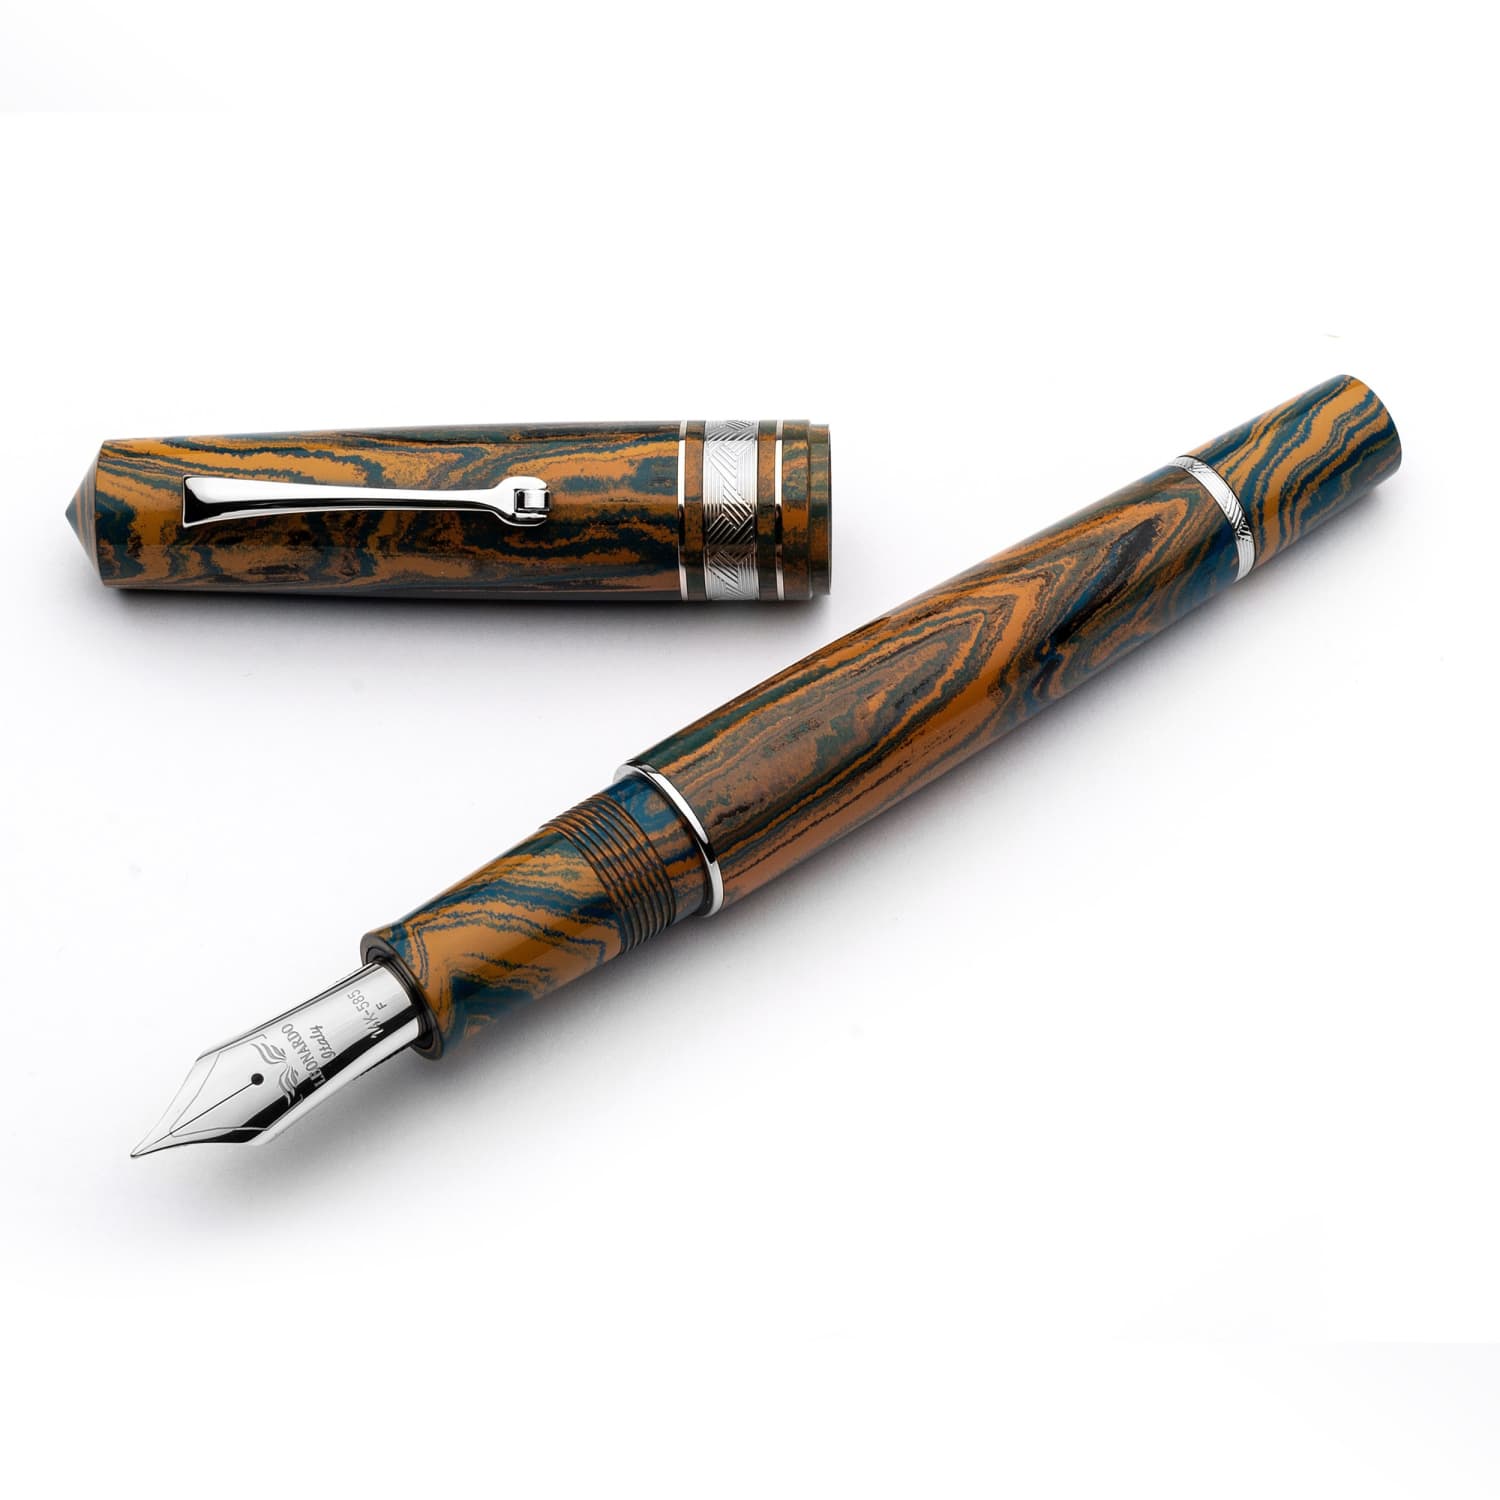 Sheaffer Pen Sets Fountain Pen 14k U.S.A. 585- Boxed